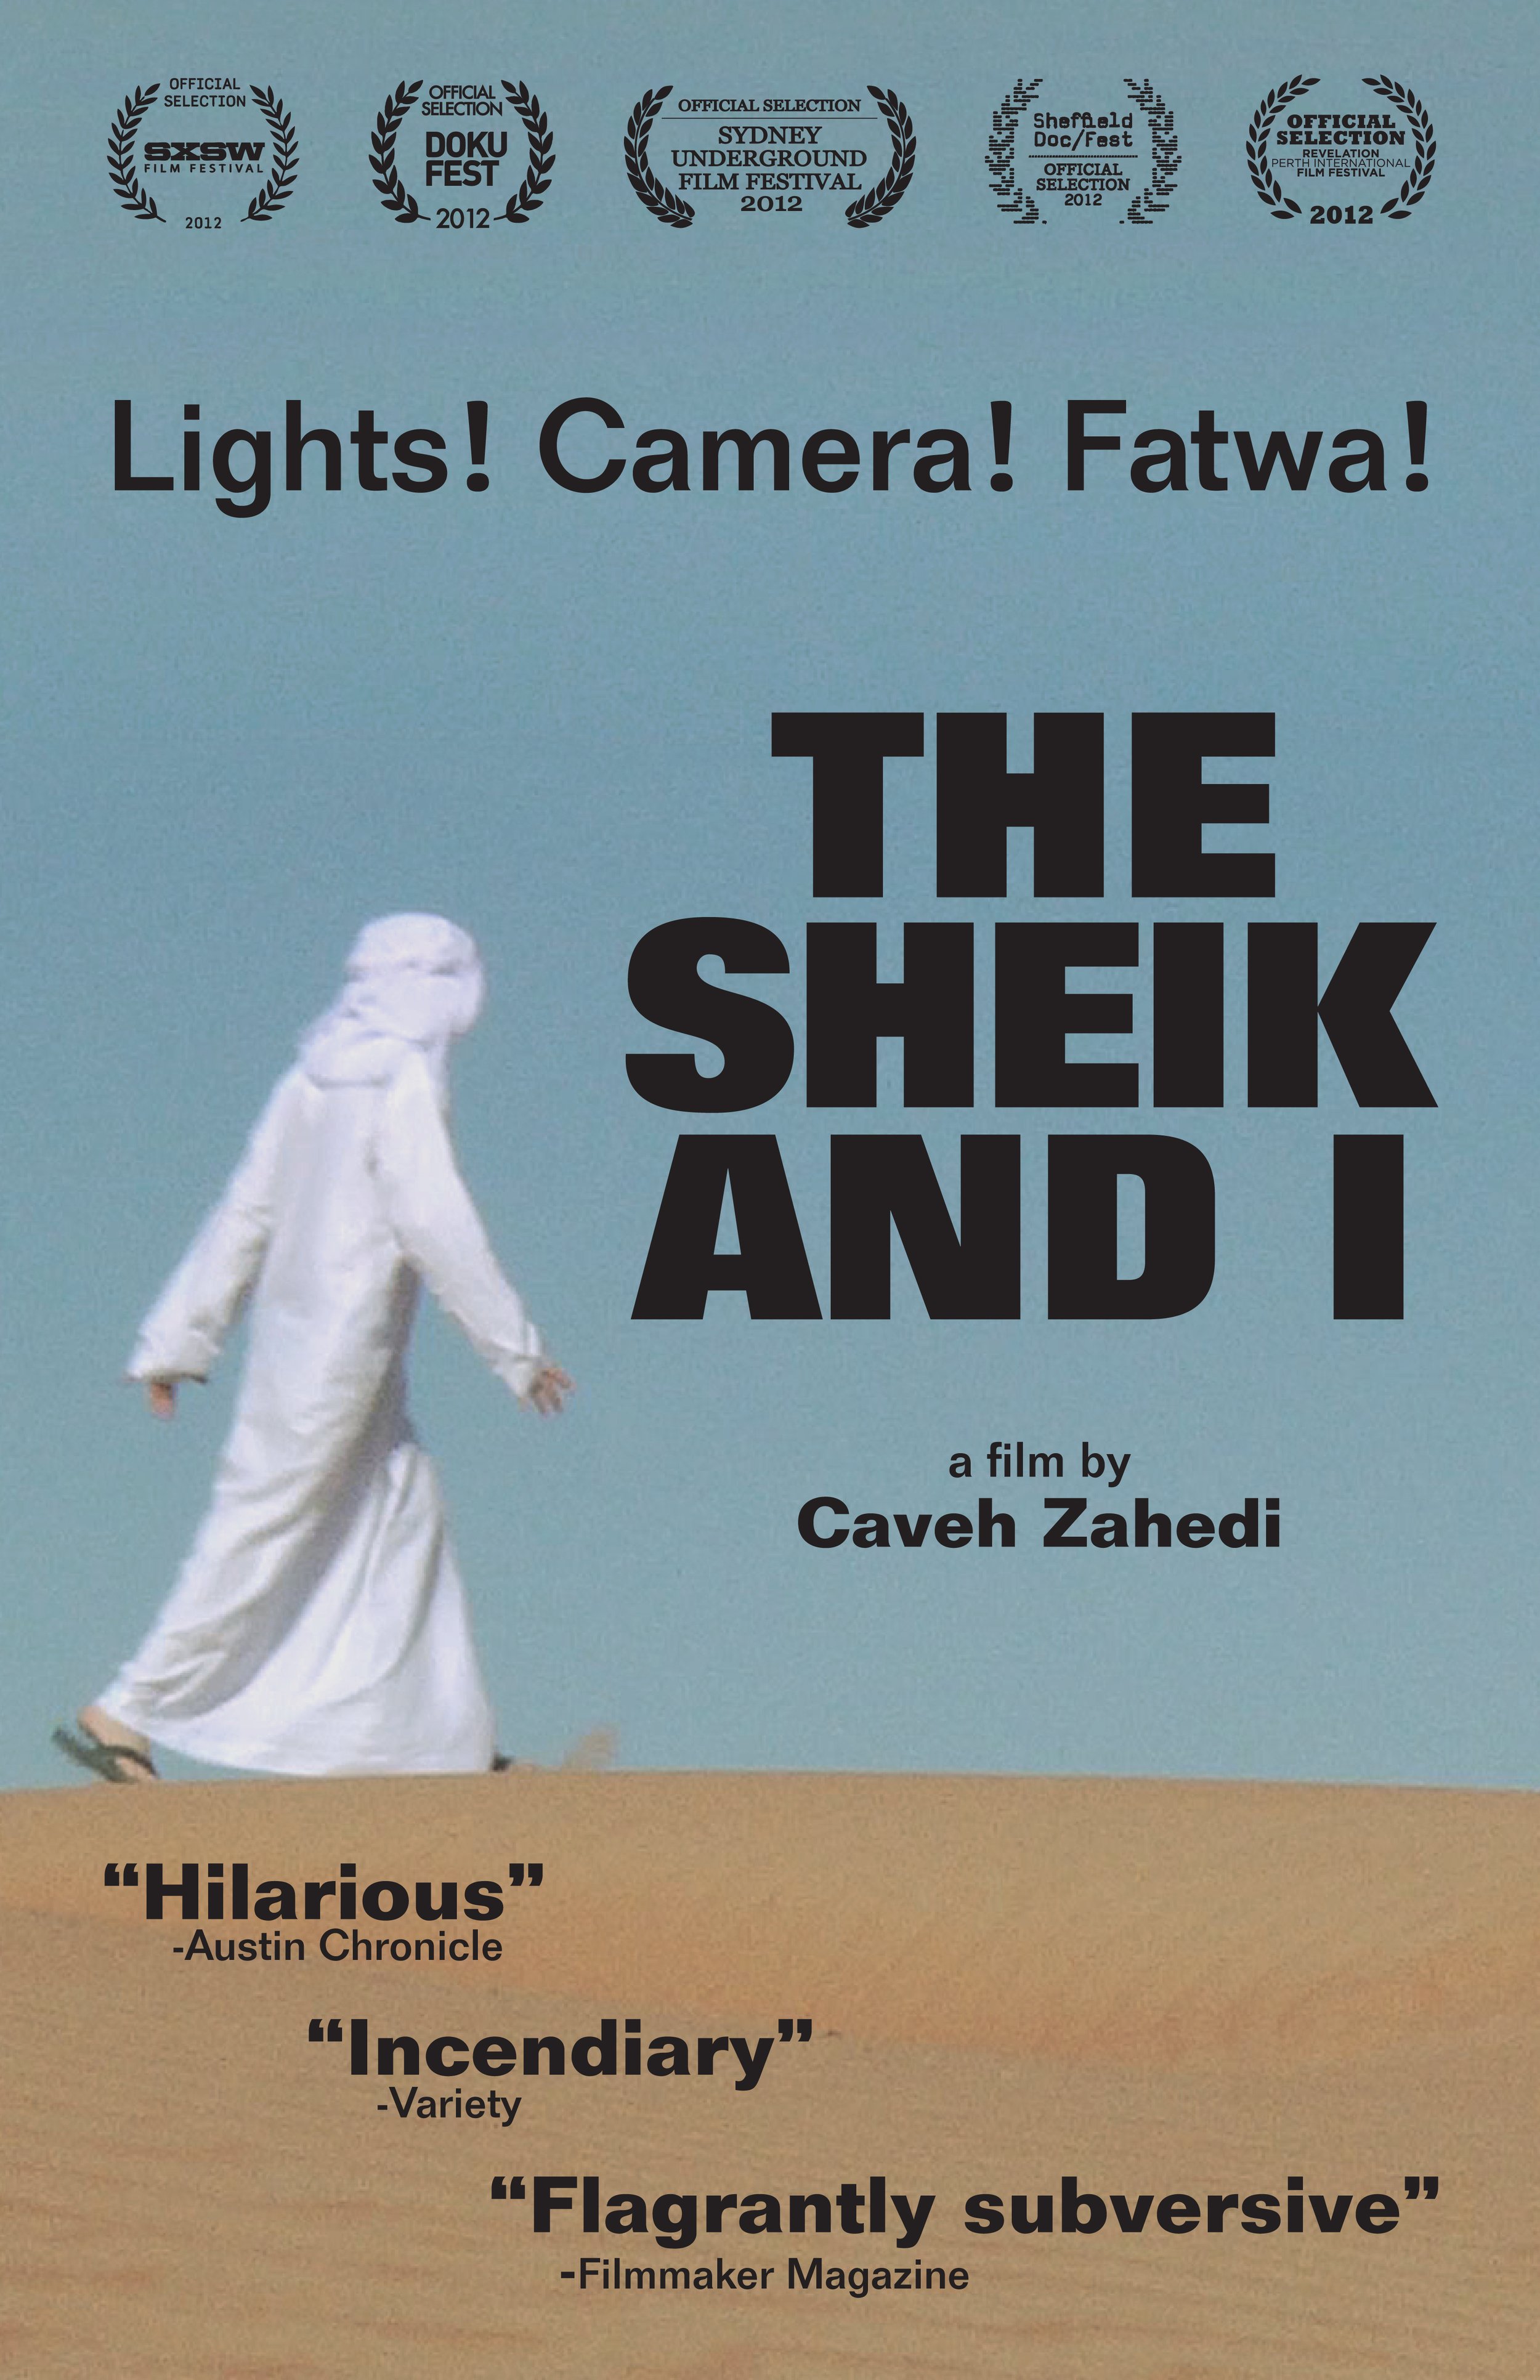 THE SHEIK AND I /// CAVEH ZAHEDI